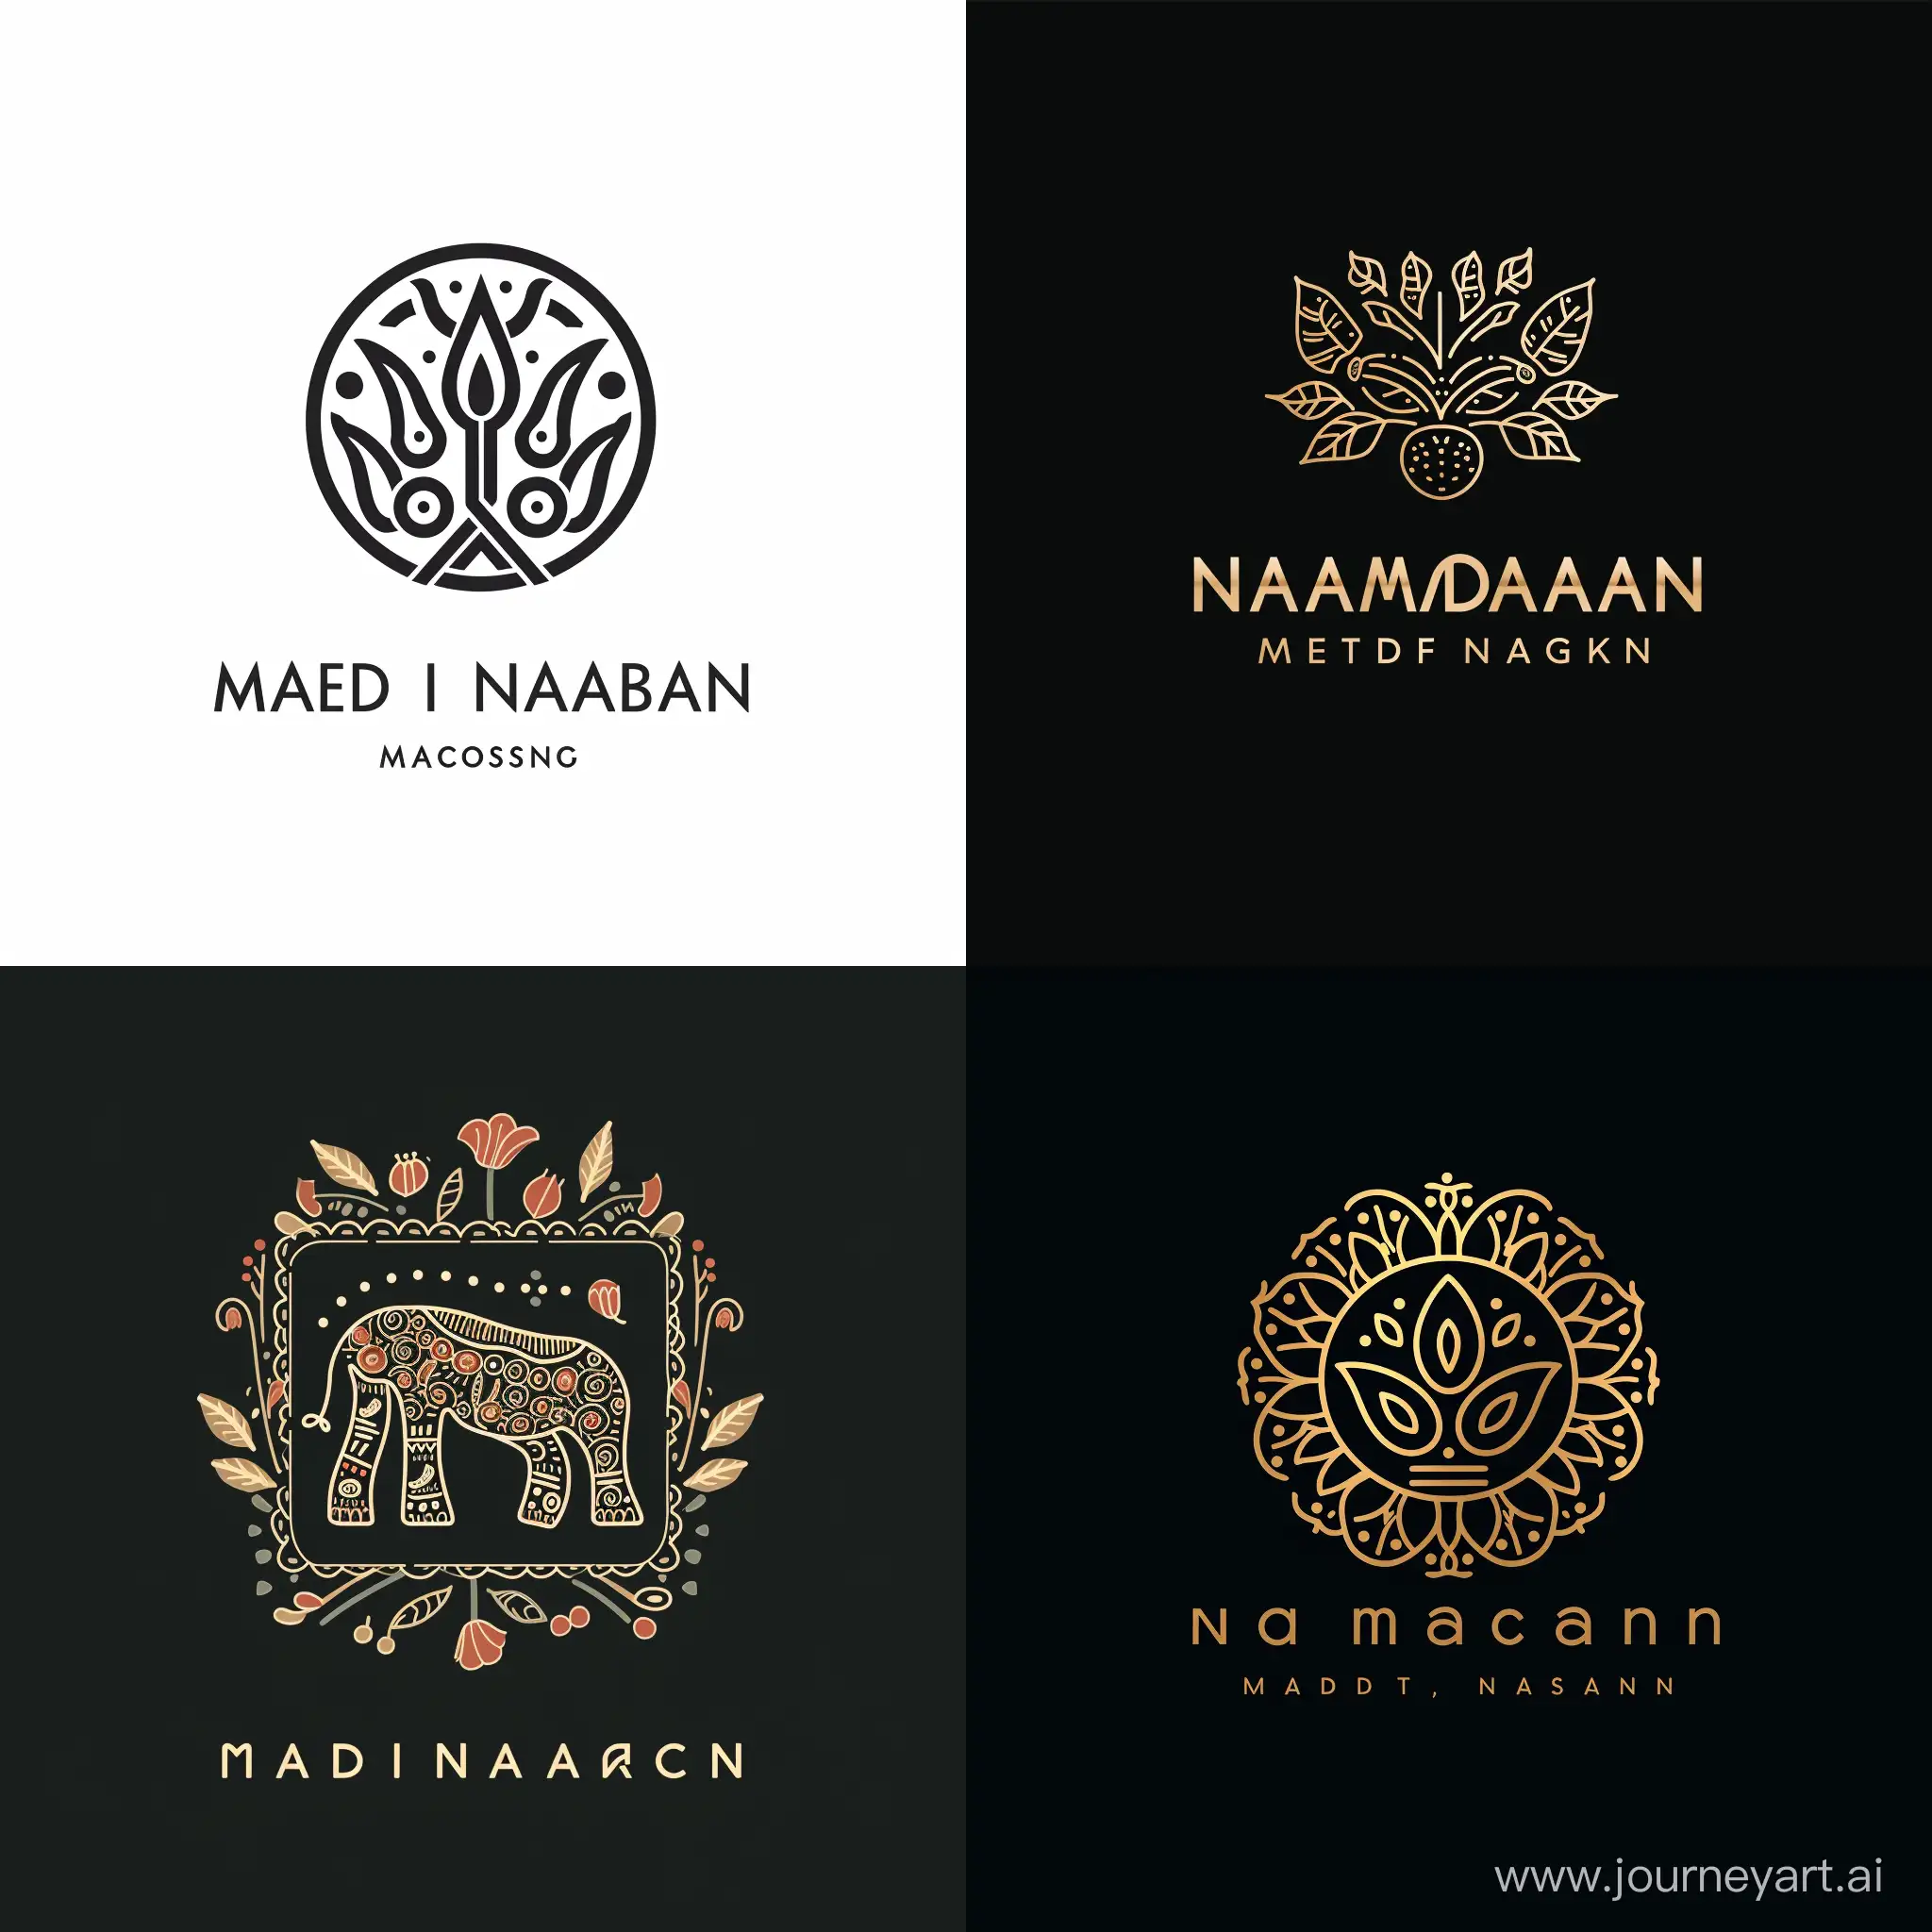 Made in Namangan logo for web site